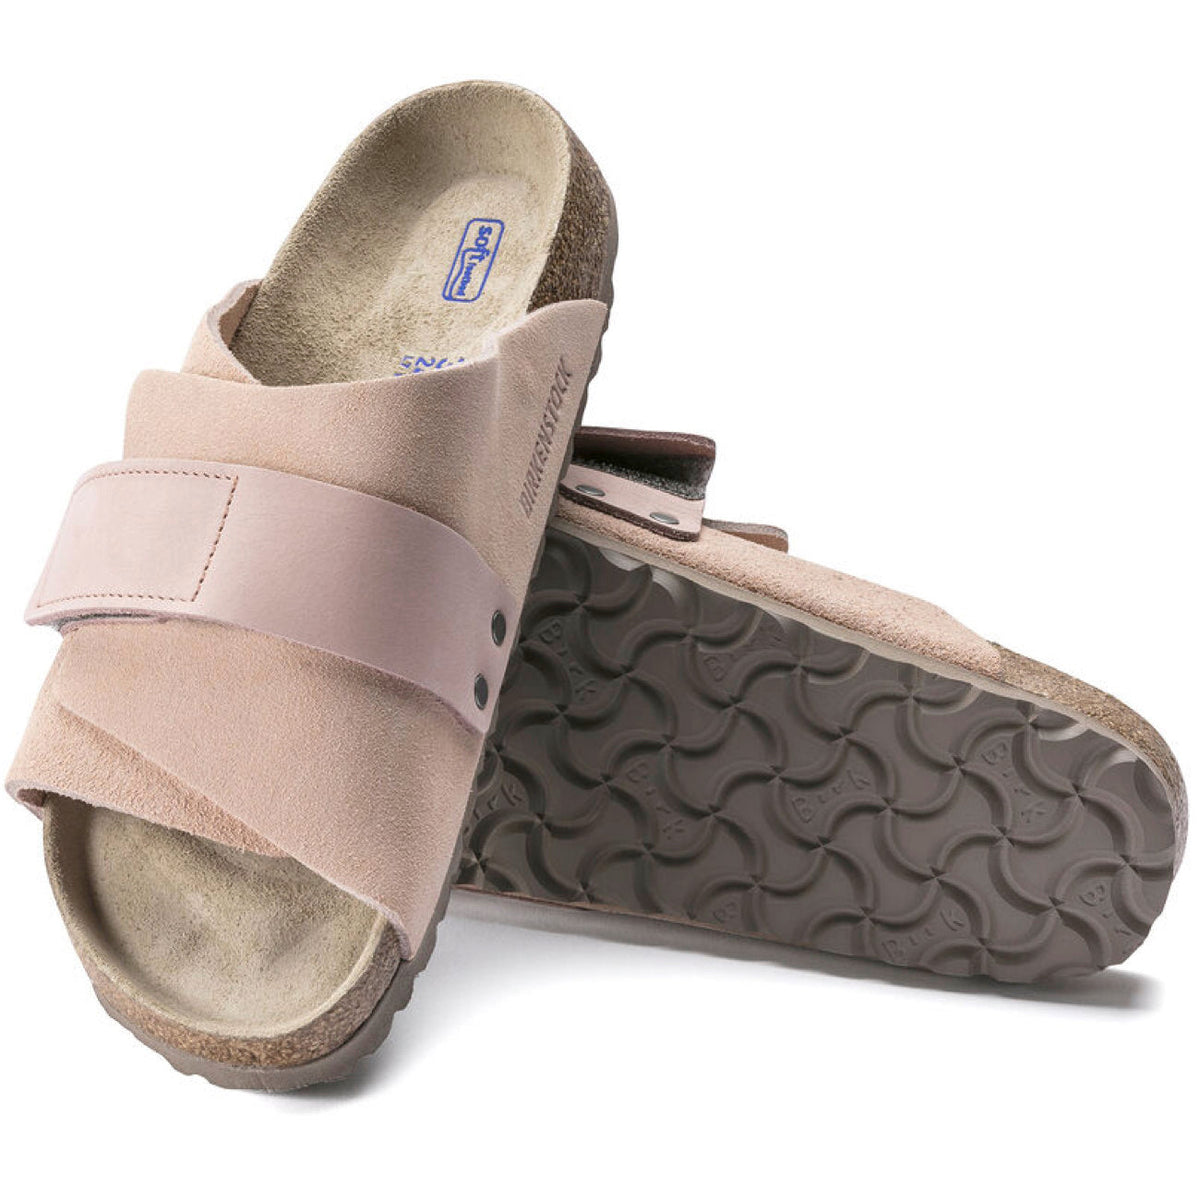 Birkenstock Seasonal, Kyoto SFB, Suede Leather/Nubuck, Narrow Fit, Soft Pink Sandals Birkenstock Seasonal 